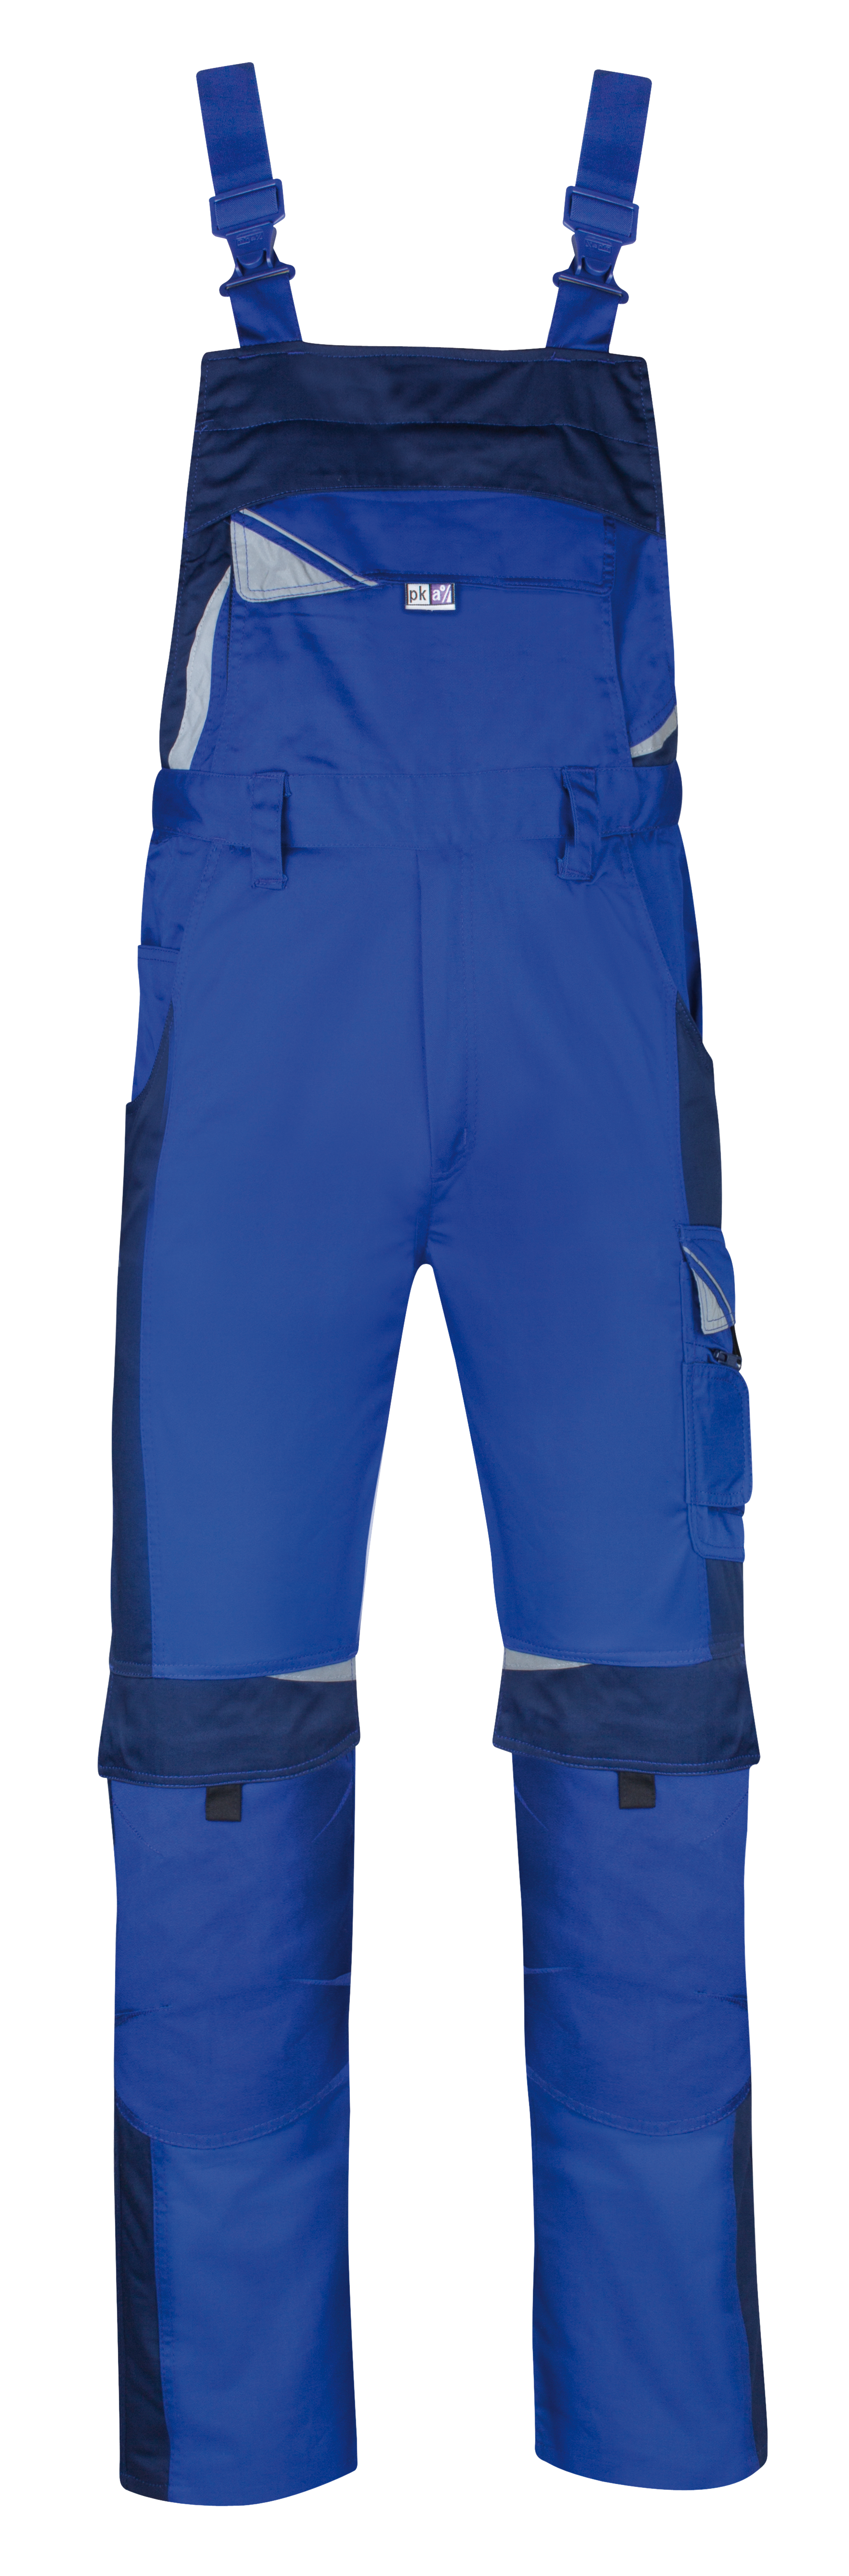 Bib Trousers FLEXFEEL (royal blue/hydron blue)